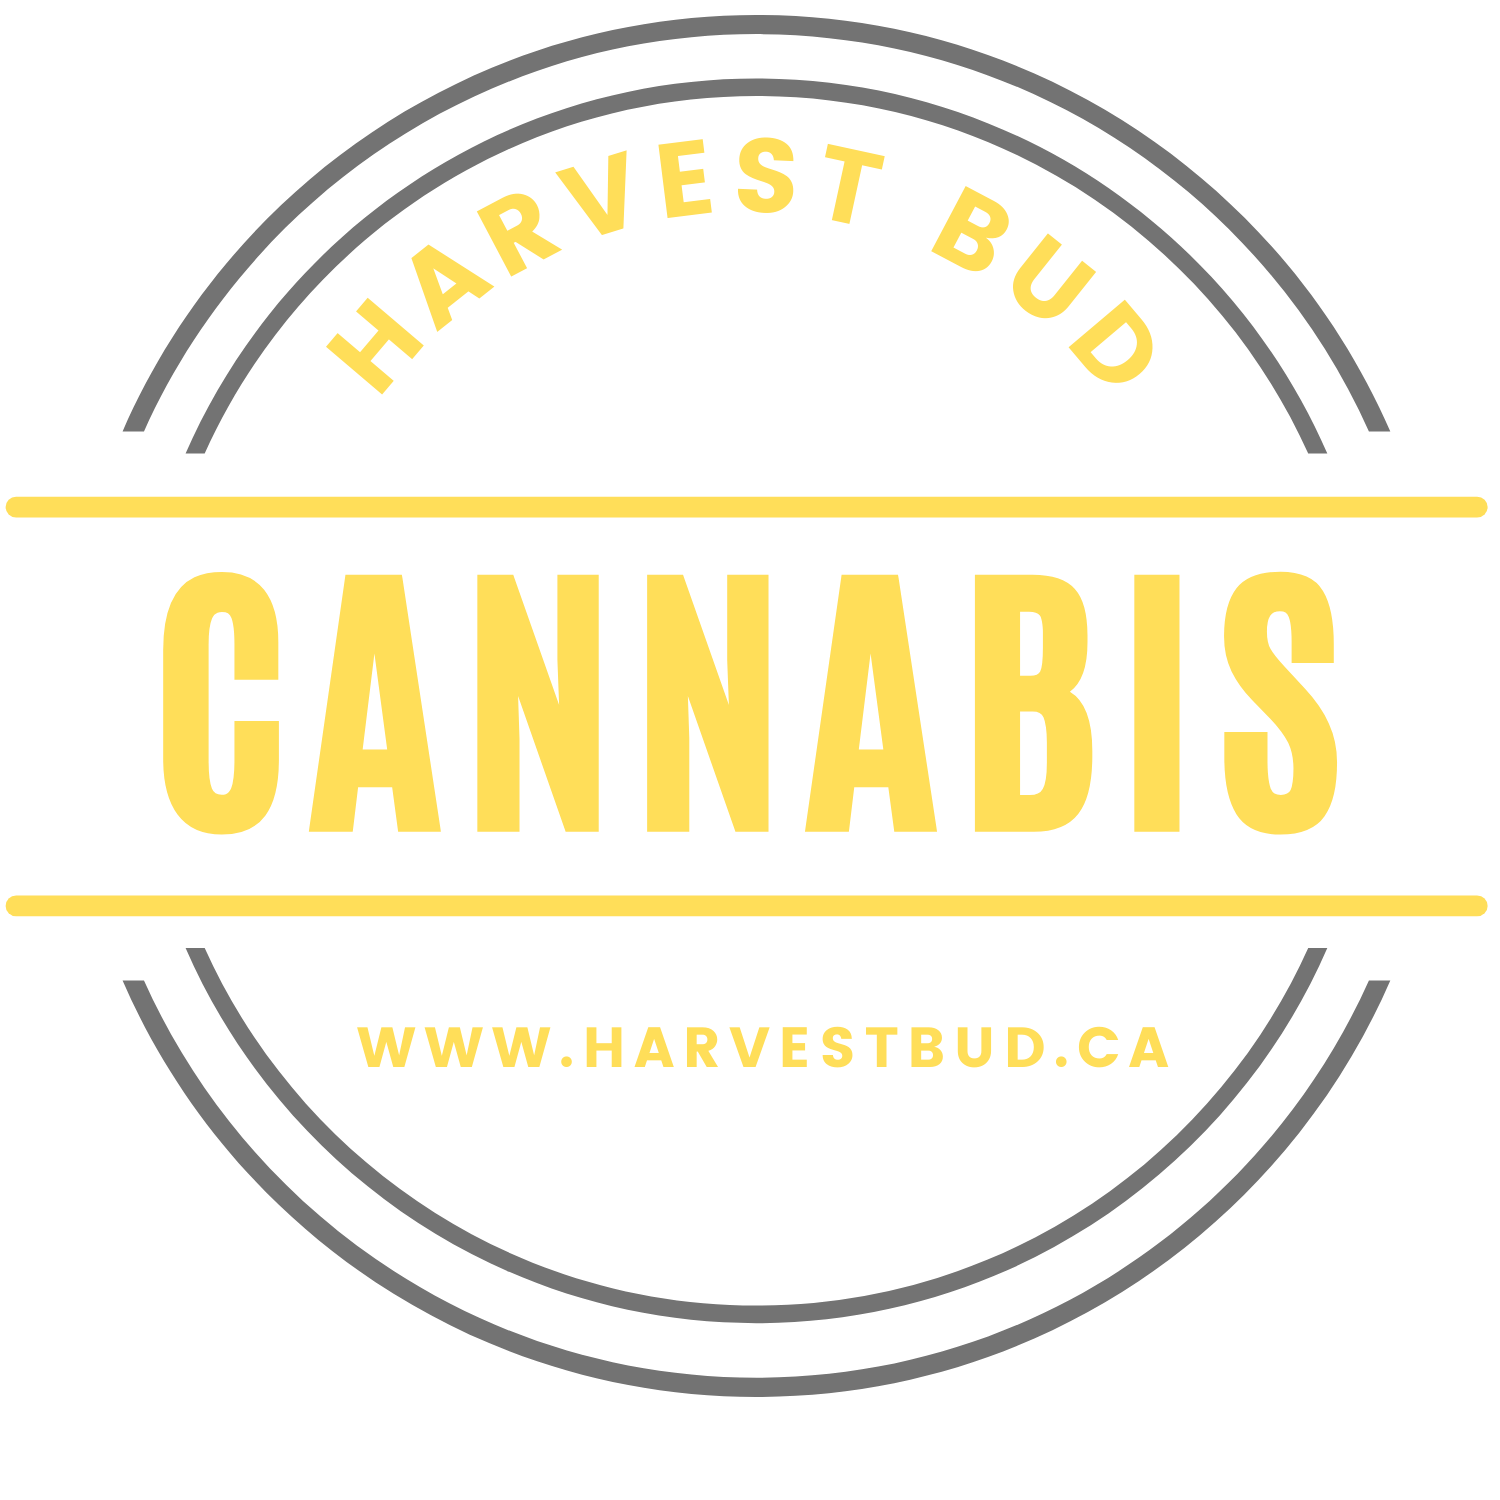 Harvest Bud Cannabis logo